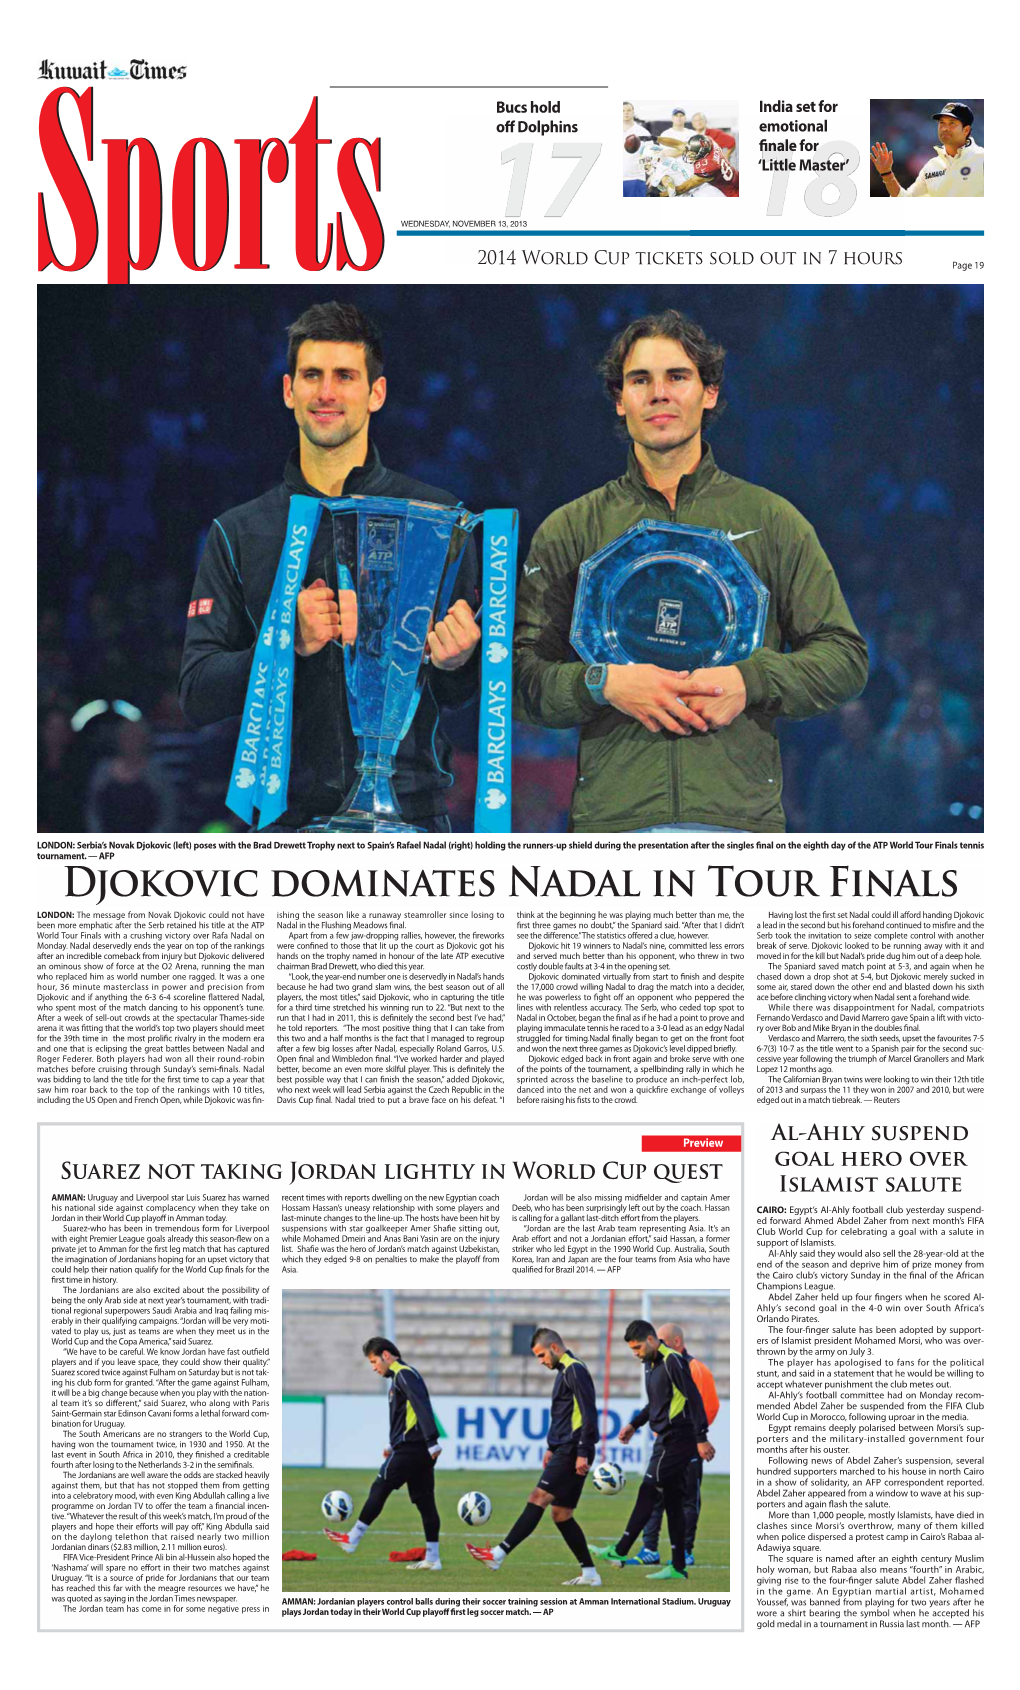 Djokovic Dominates Nadal in Tour Finals